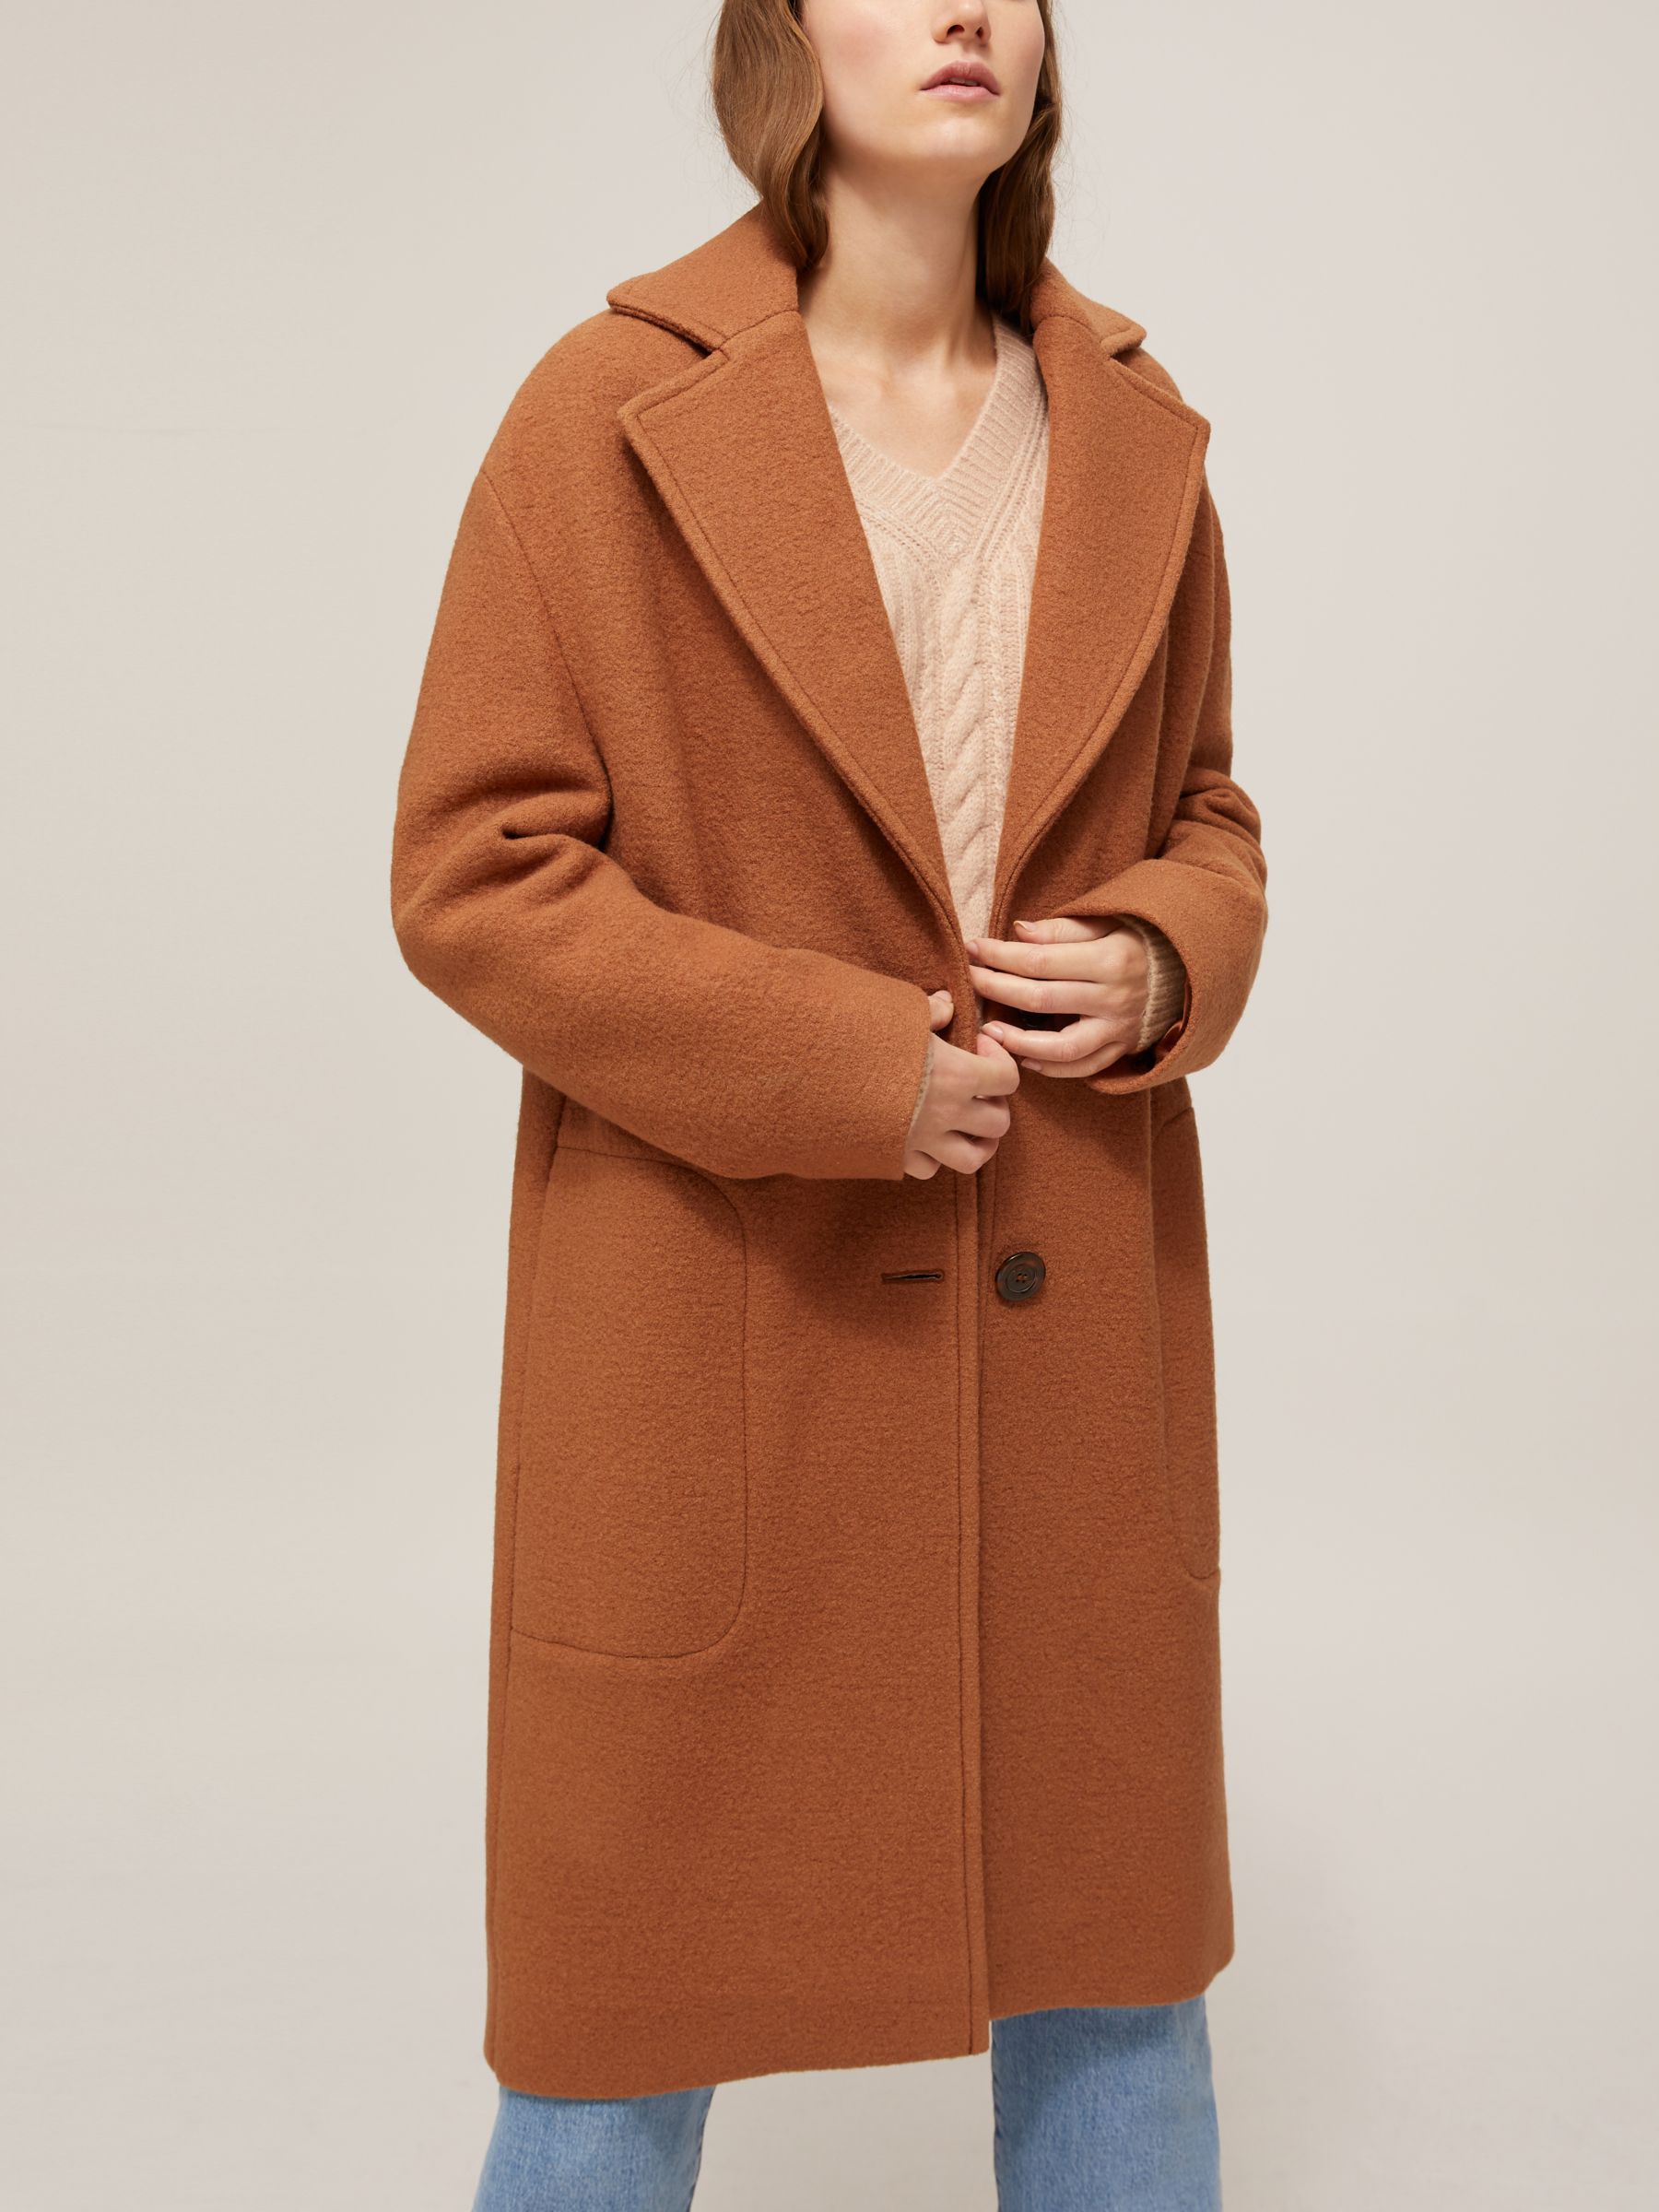 Chloé wool coat.